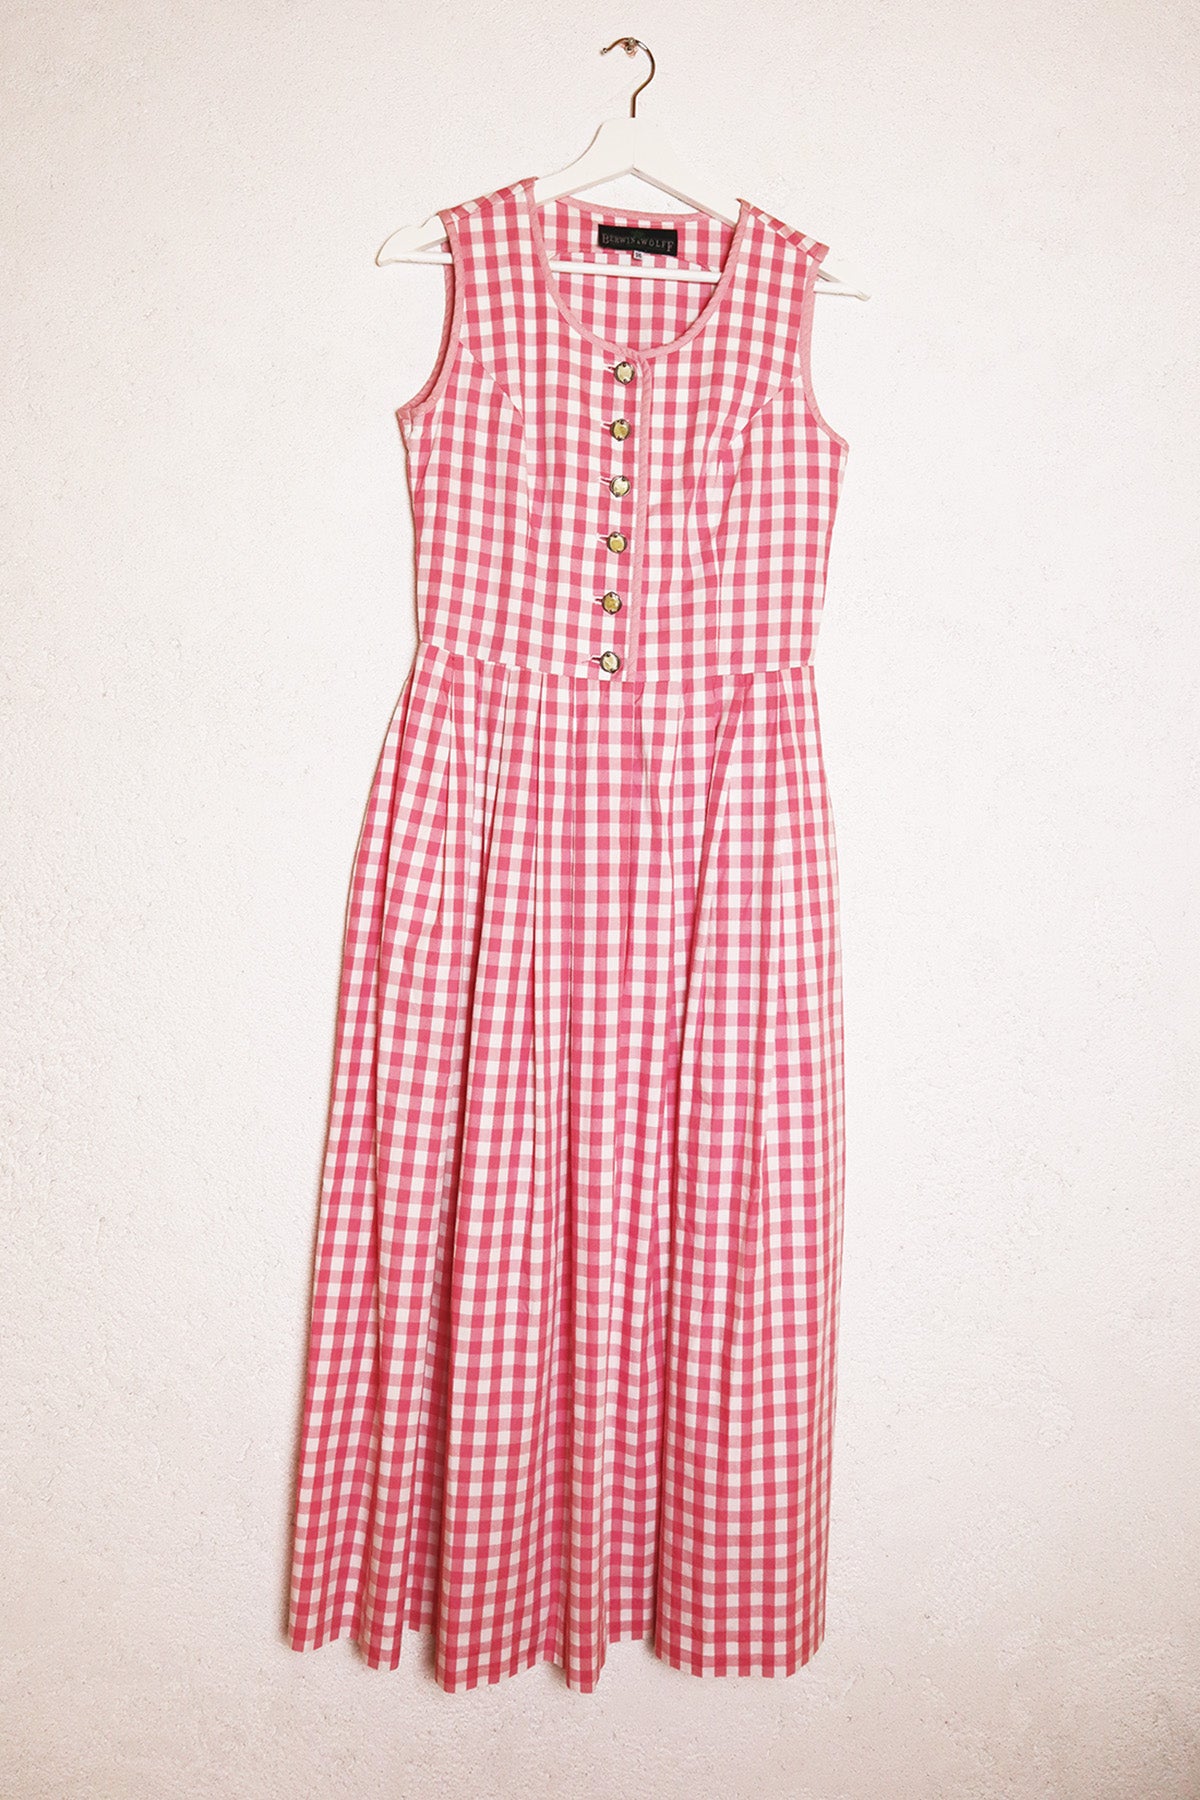 Kleid Vintage Karo Rosa ( Gr. S )